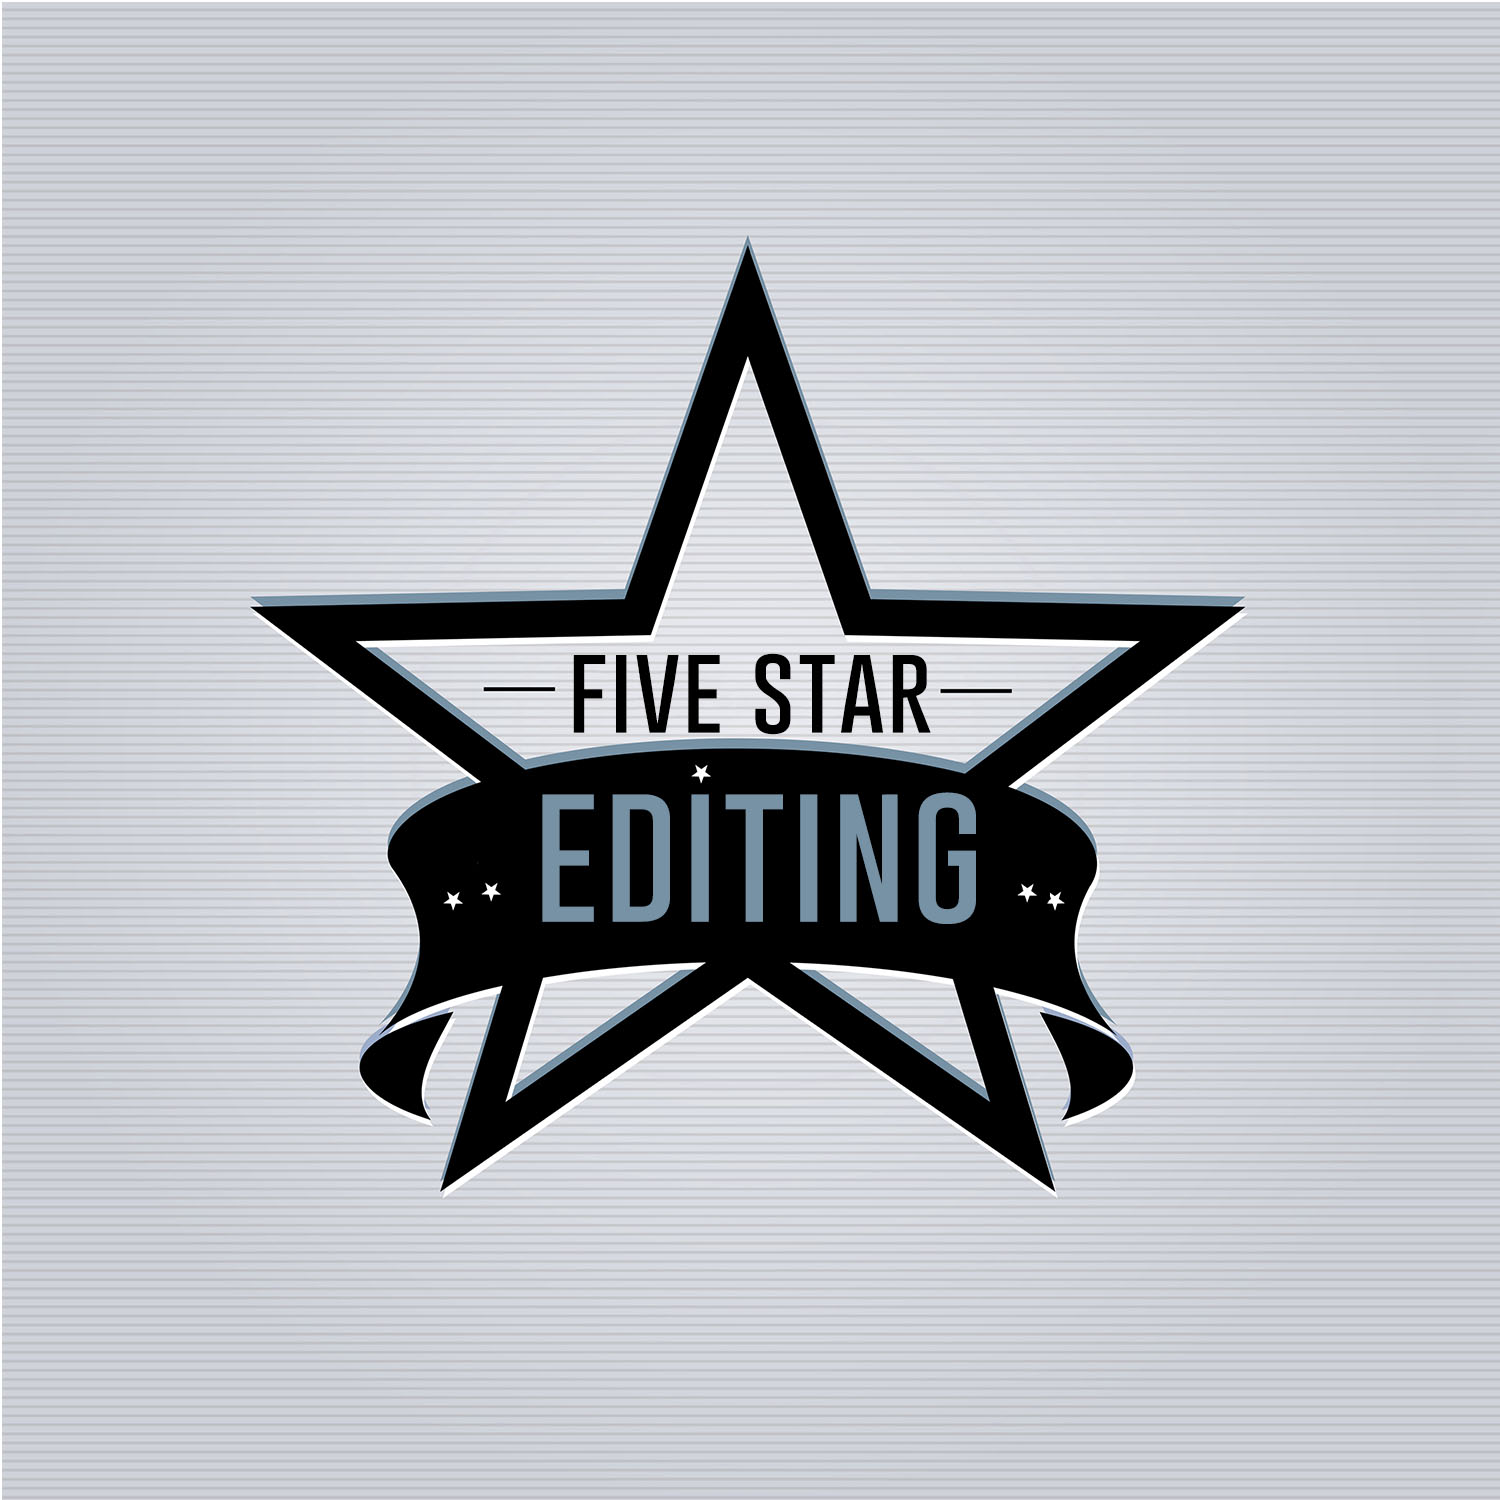 Edited stars